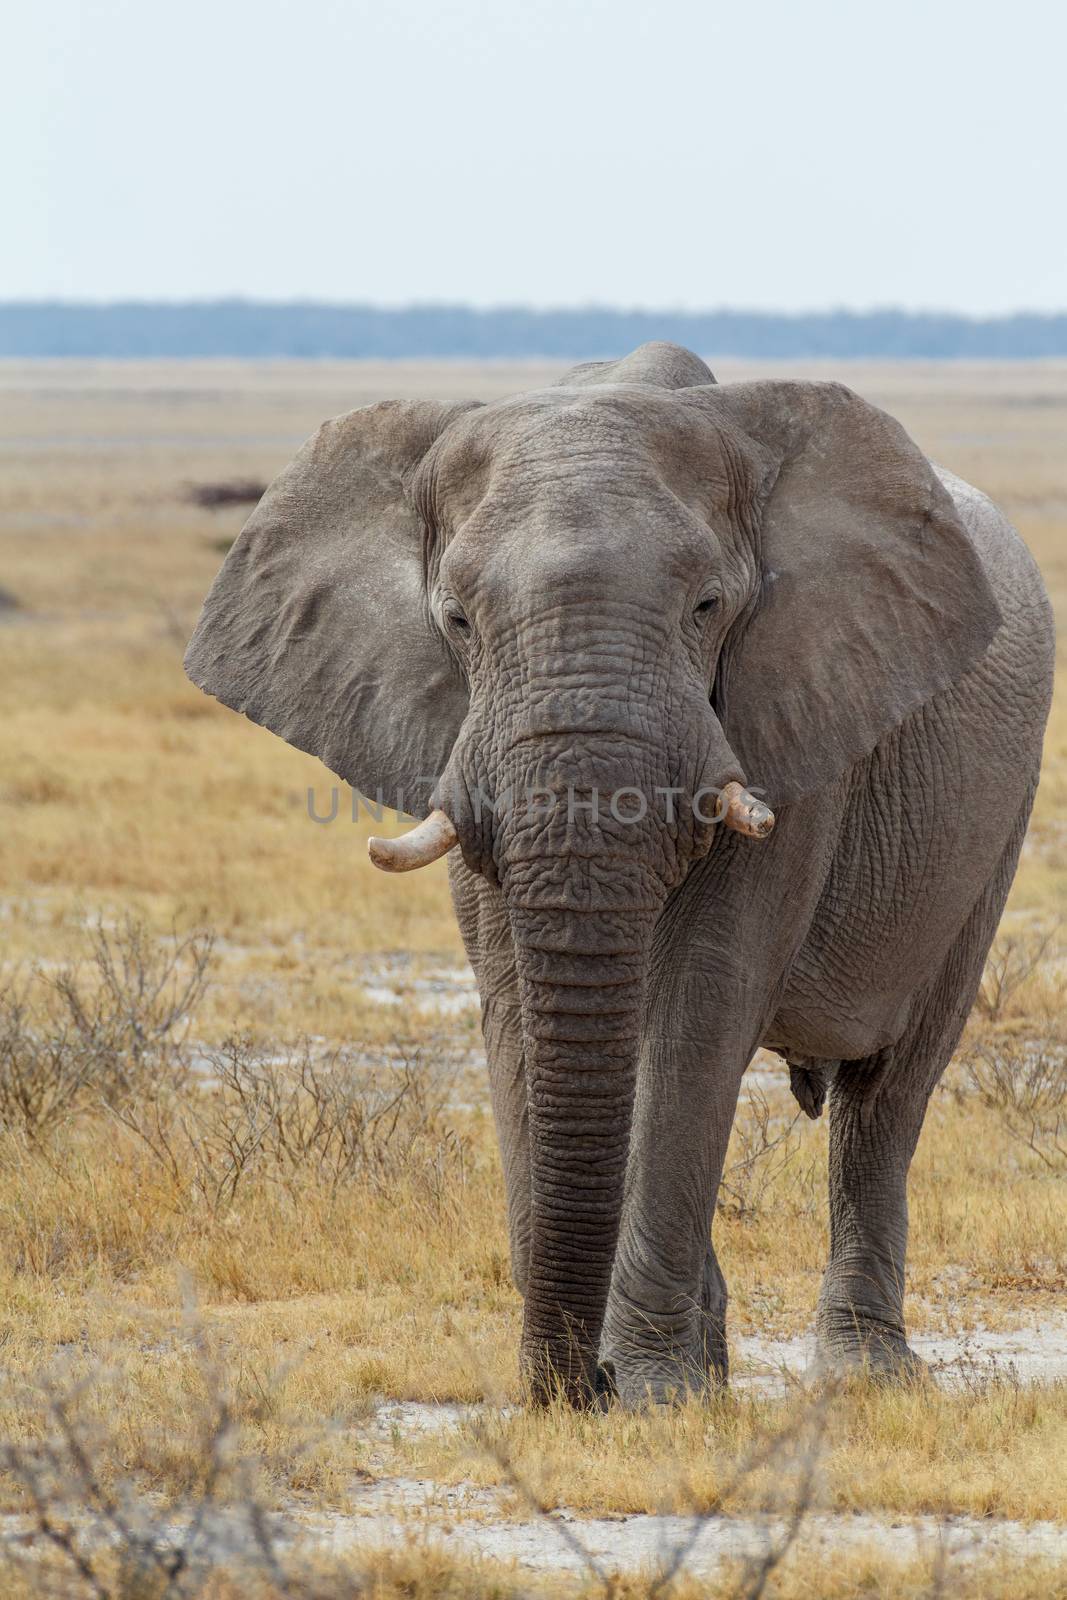 African Elephant in Namibia, Africa safari wildlife by artush